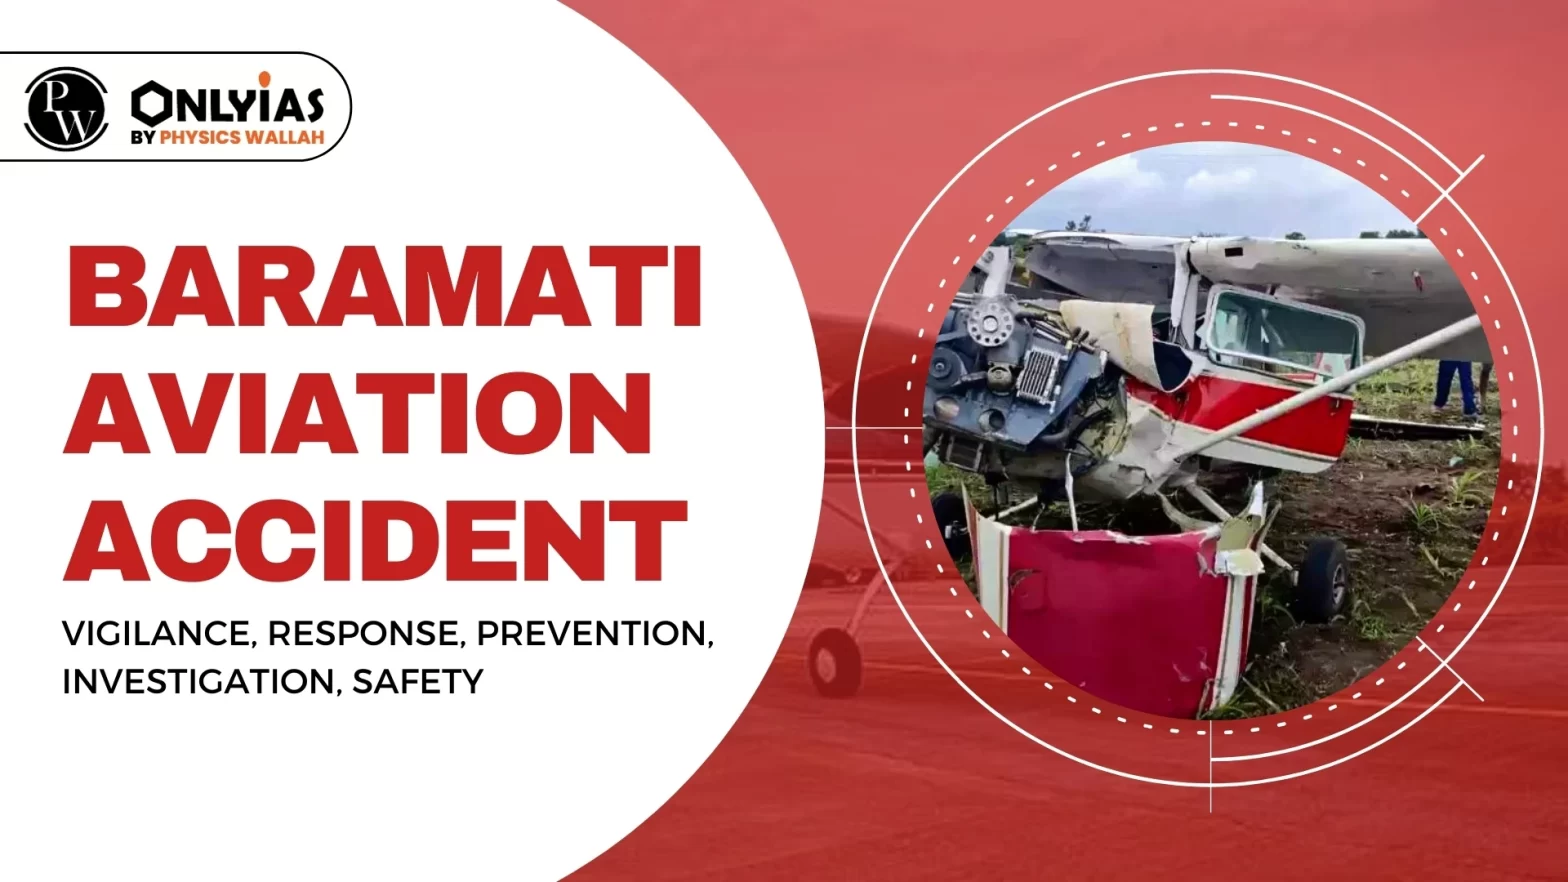 Baramati Aviation Accident: Vigilance, Response, Prevention, Investigation, Safety